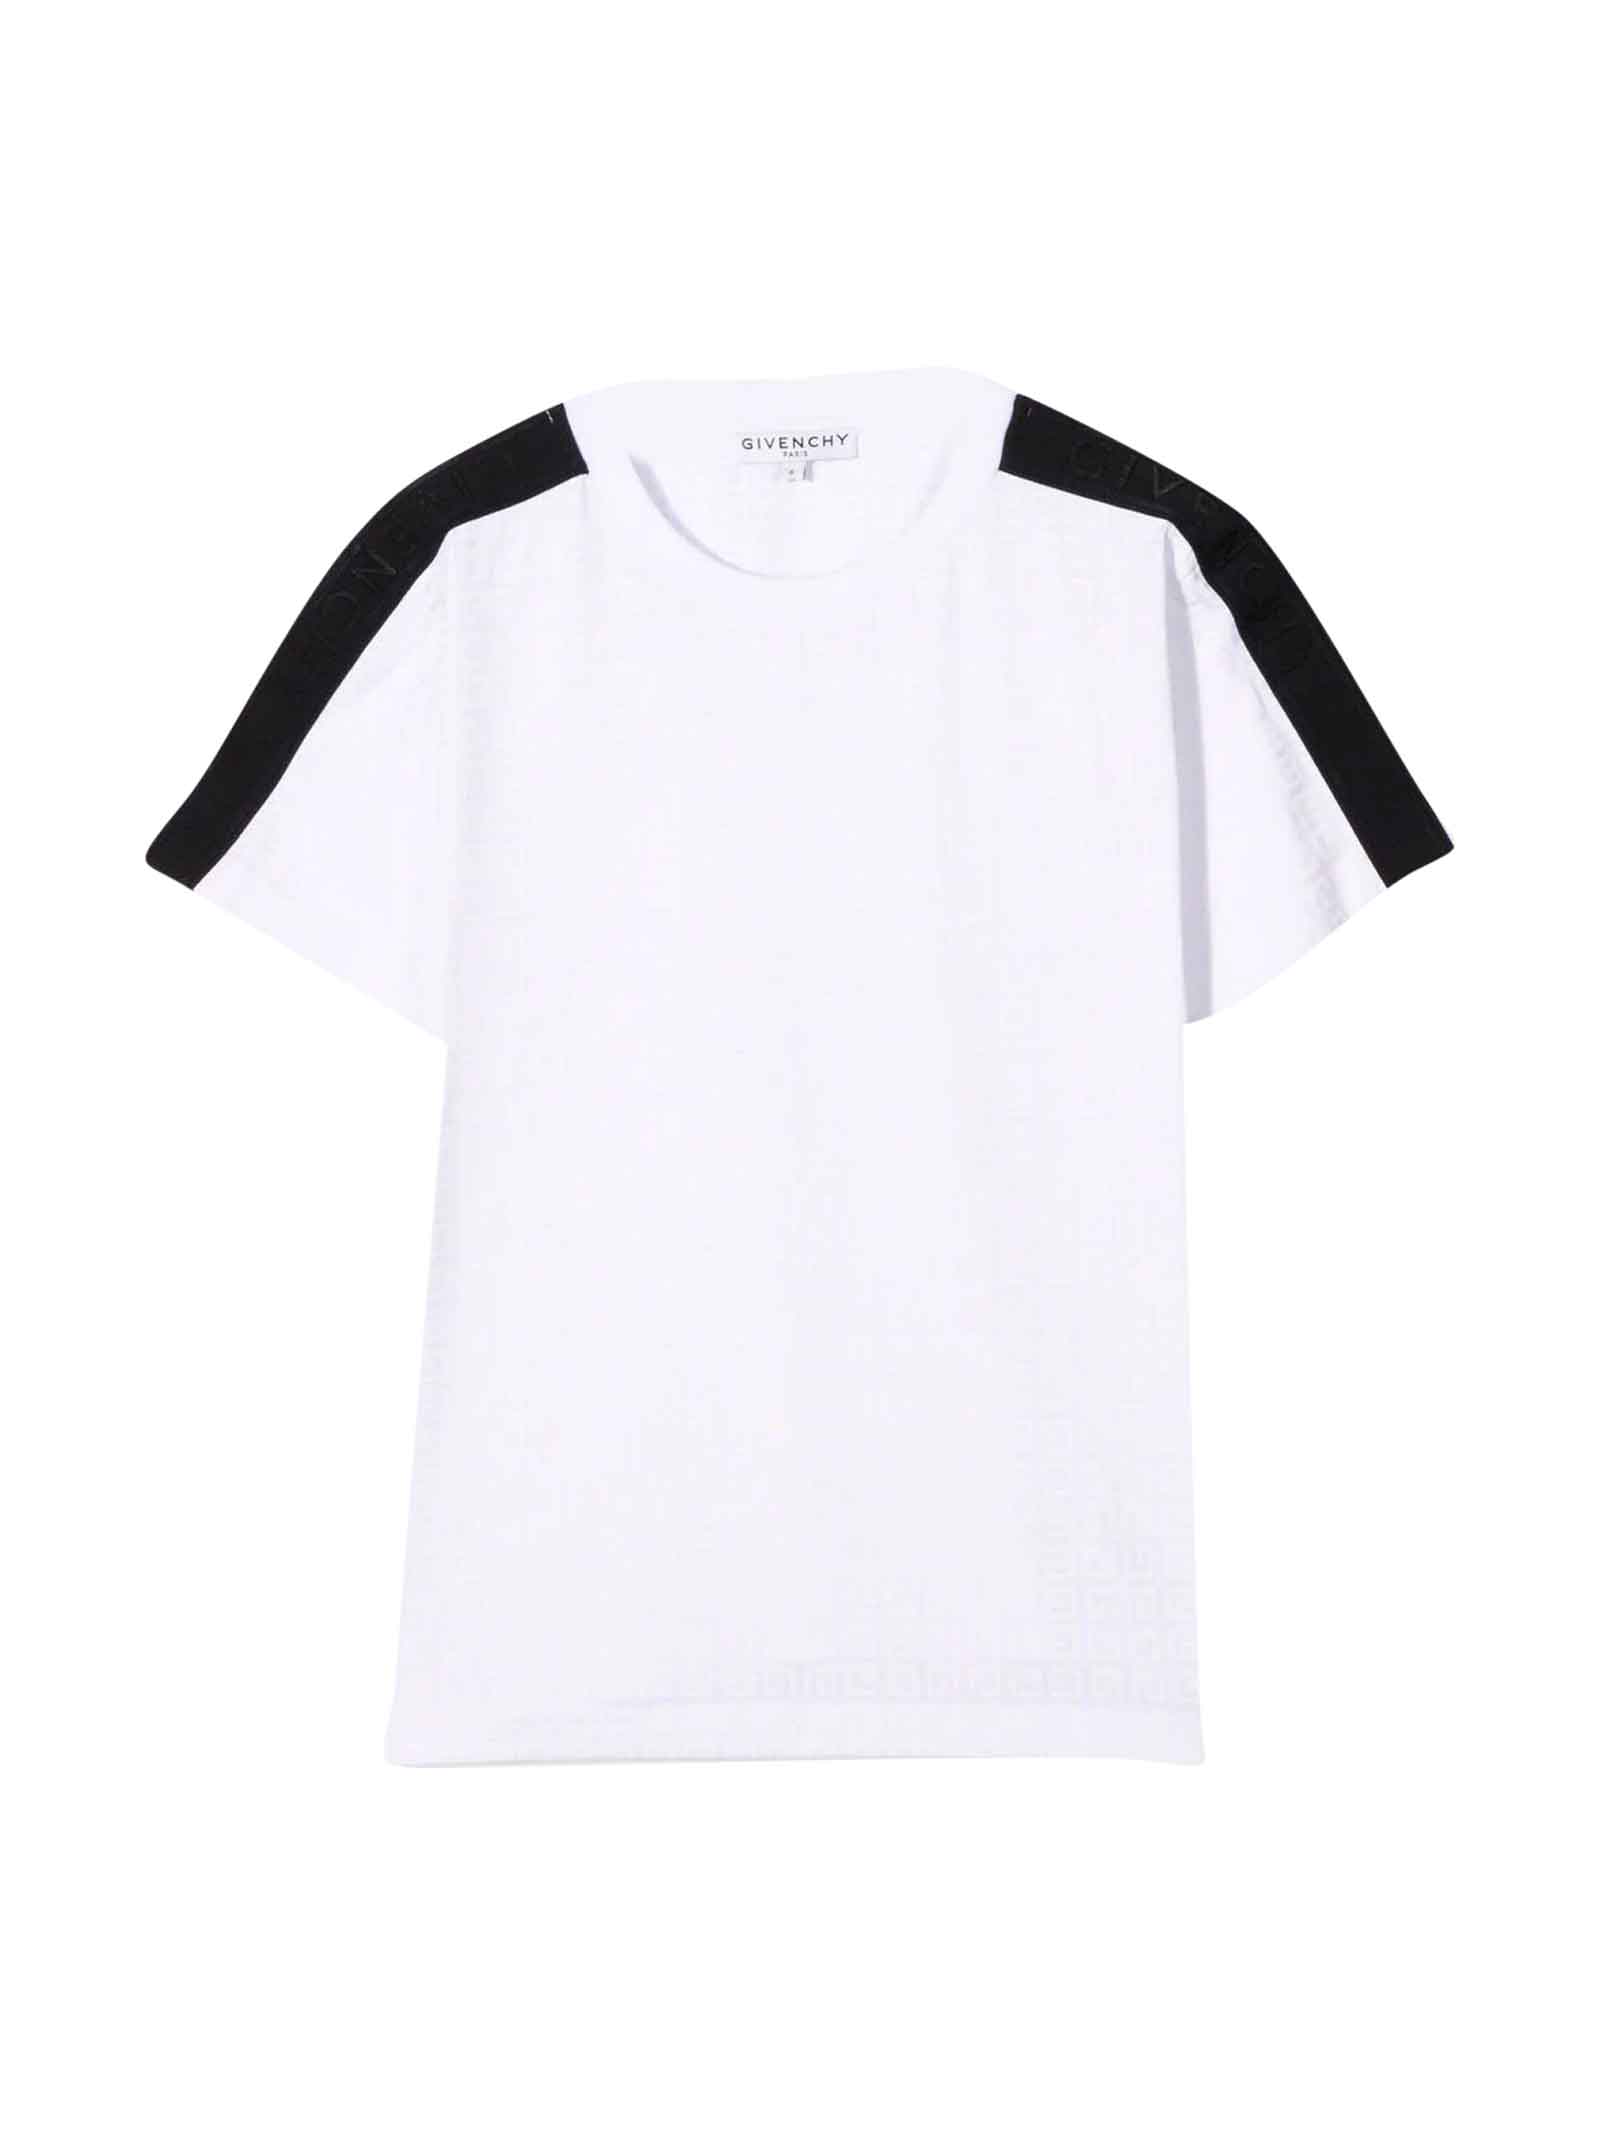 Givenchy White And Black Unisex T-shirt